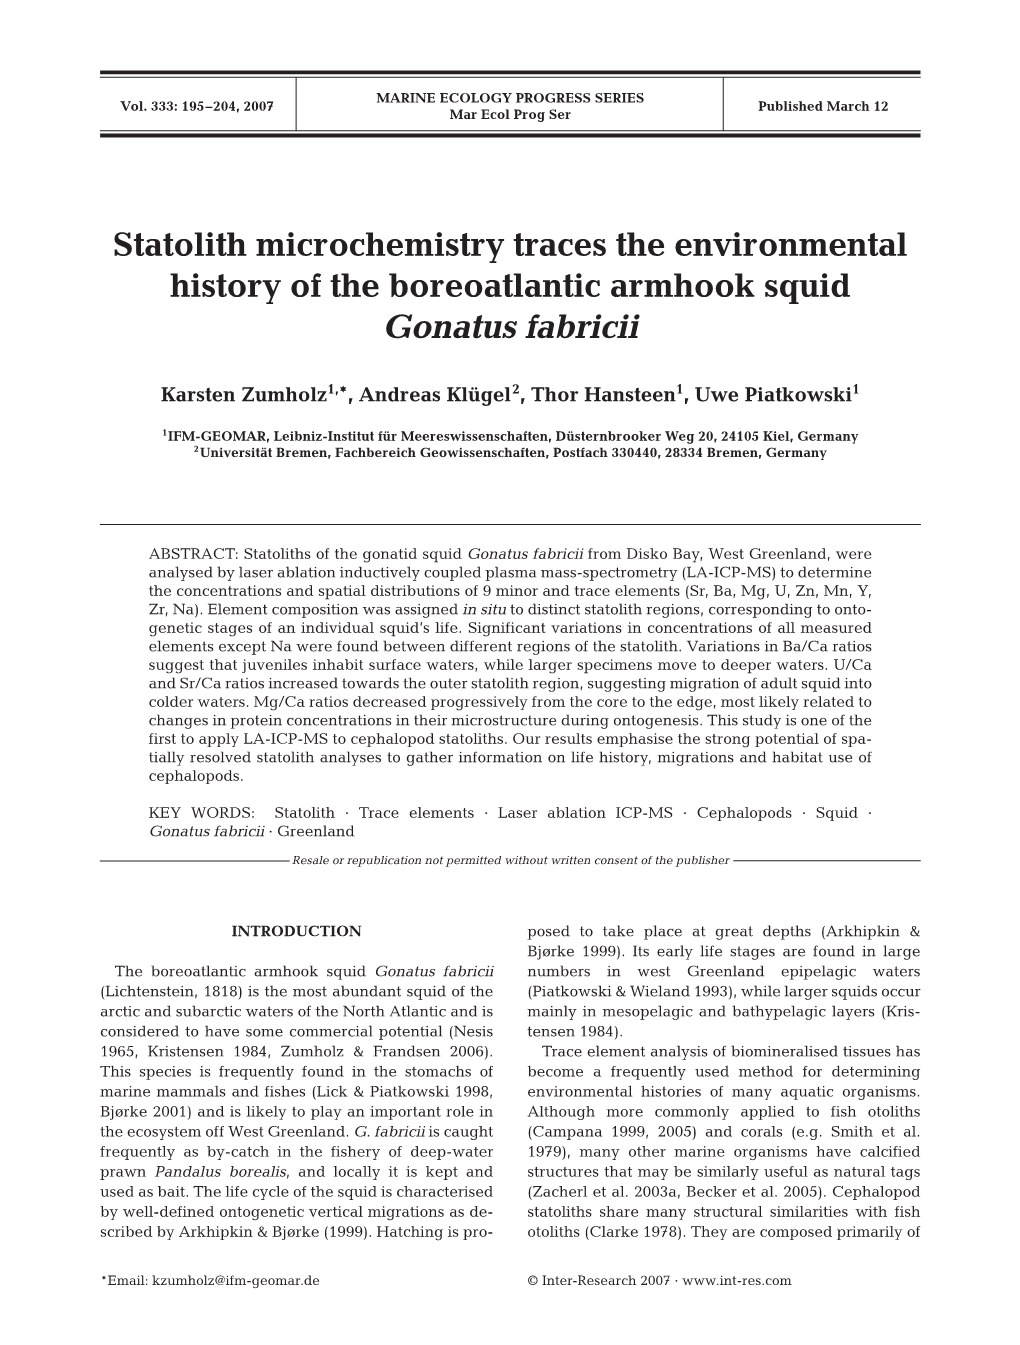 Statolith Microchemistry Traces the Environmental History of the Boreoatlantic Armhook Squid Gonatus Fabricii